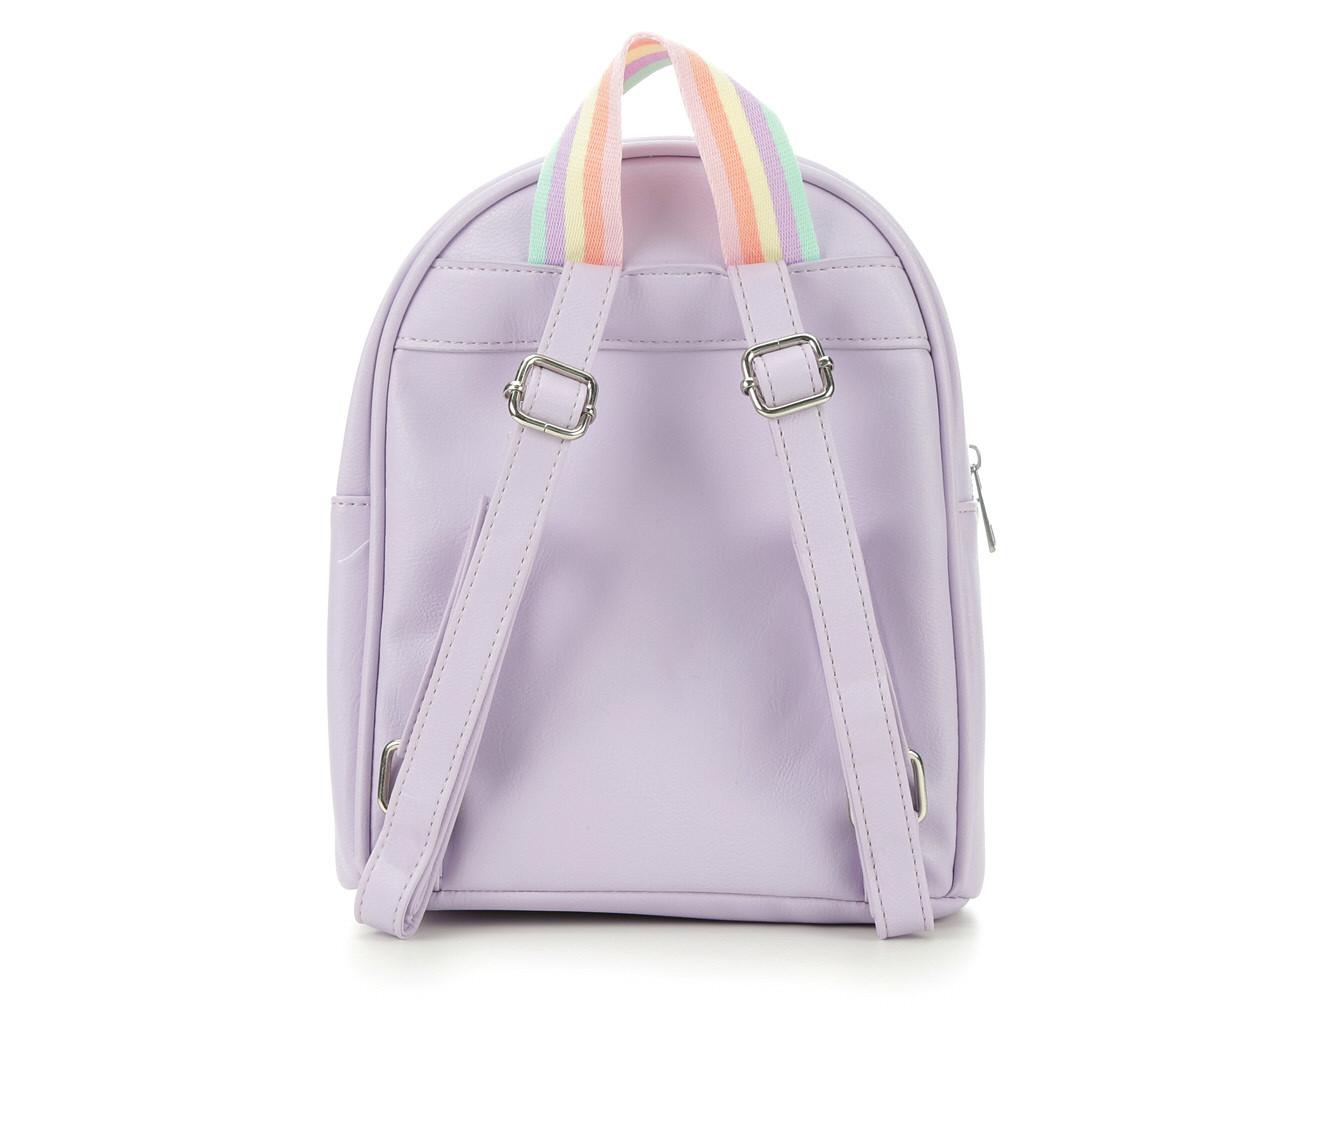 OMG Accessories Gwen Rainbow Crown Mini Backpack